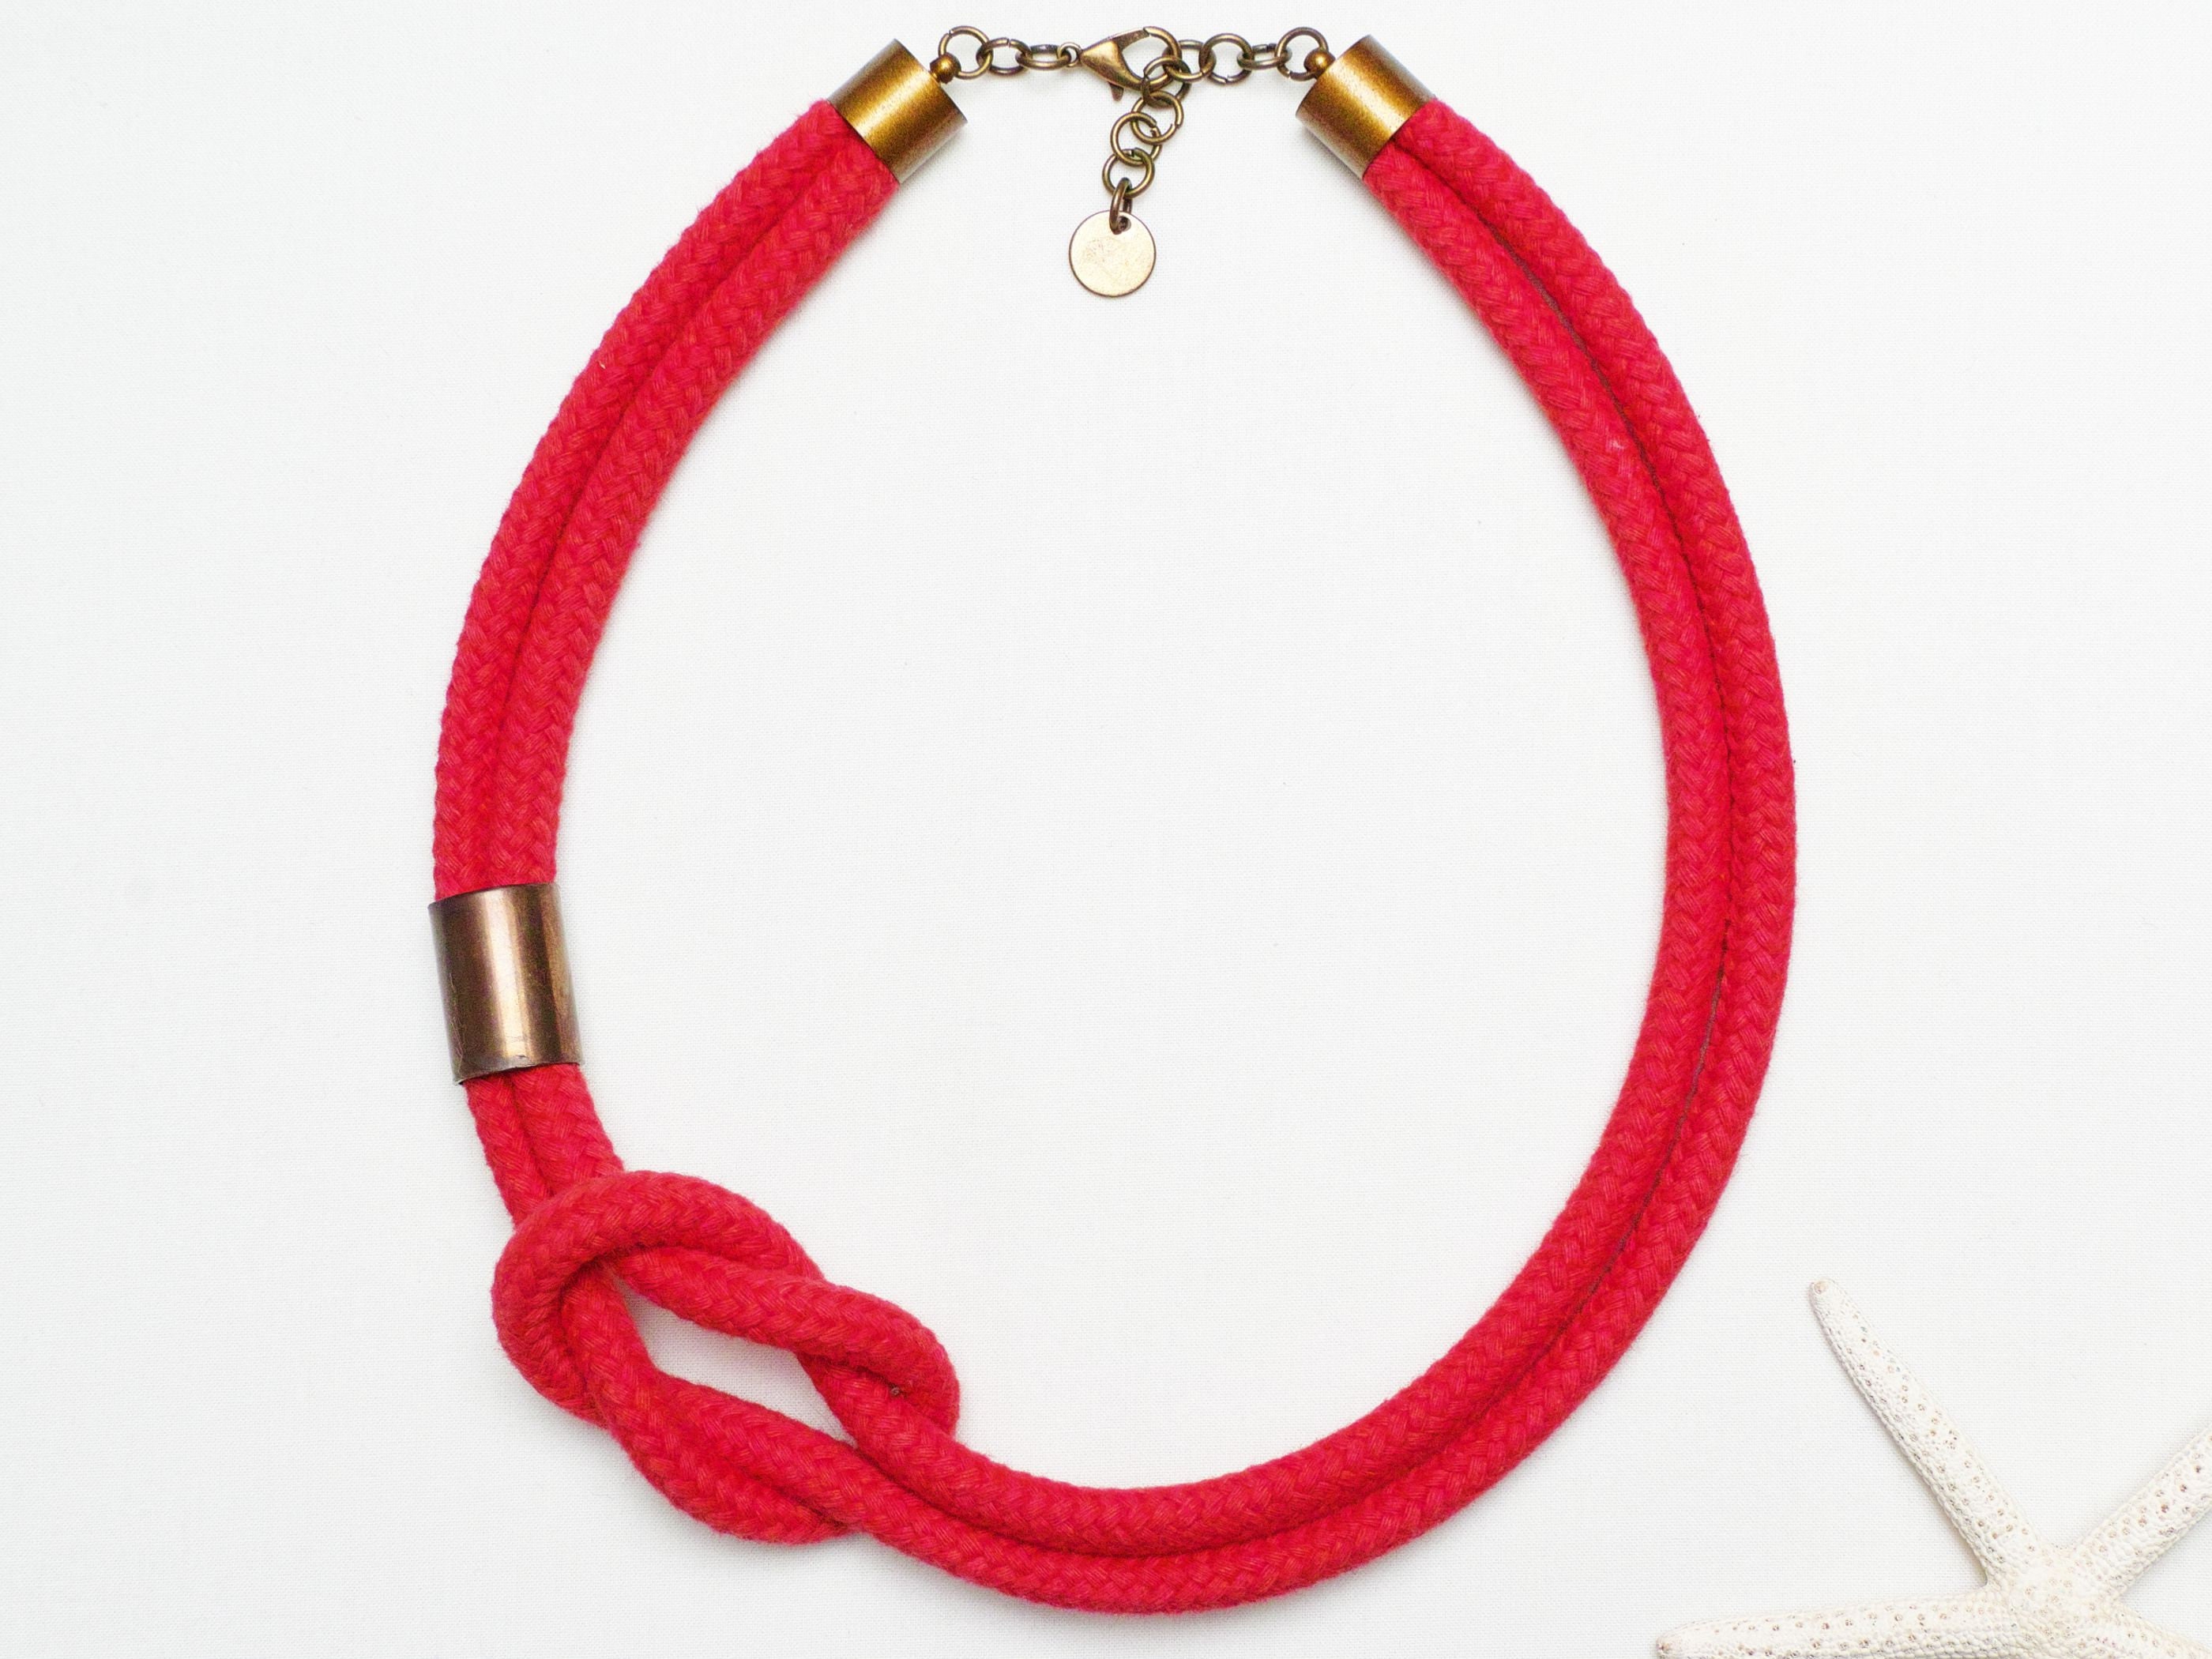 Neutral Braided Wax Cord Bracelet - VivaLife Jewelry